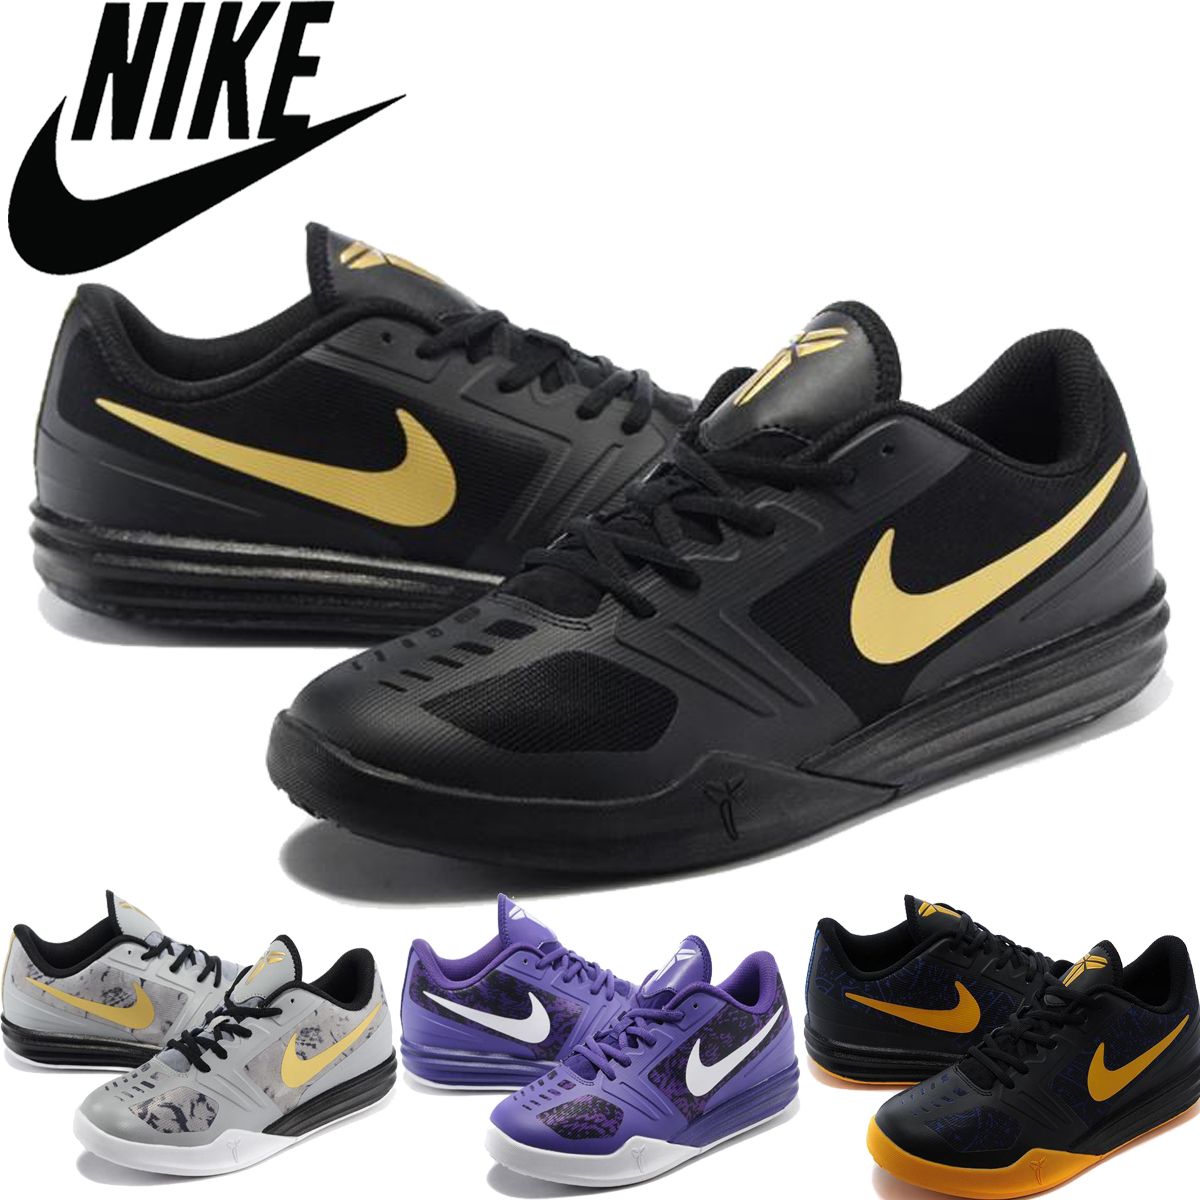 Nike Kobe Mentality Basketball Shoes Nike Men Shoes Athletic Trainers Footwear Tennis Sneakers ...